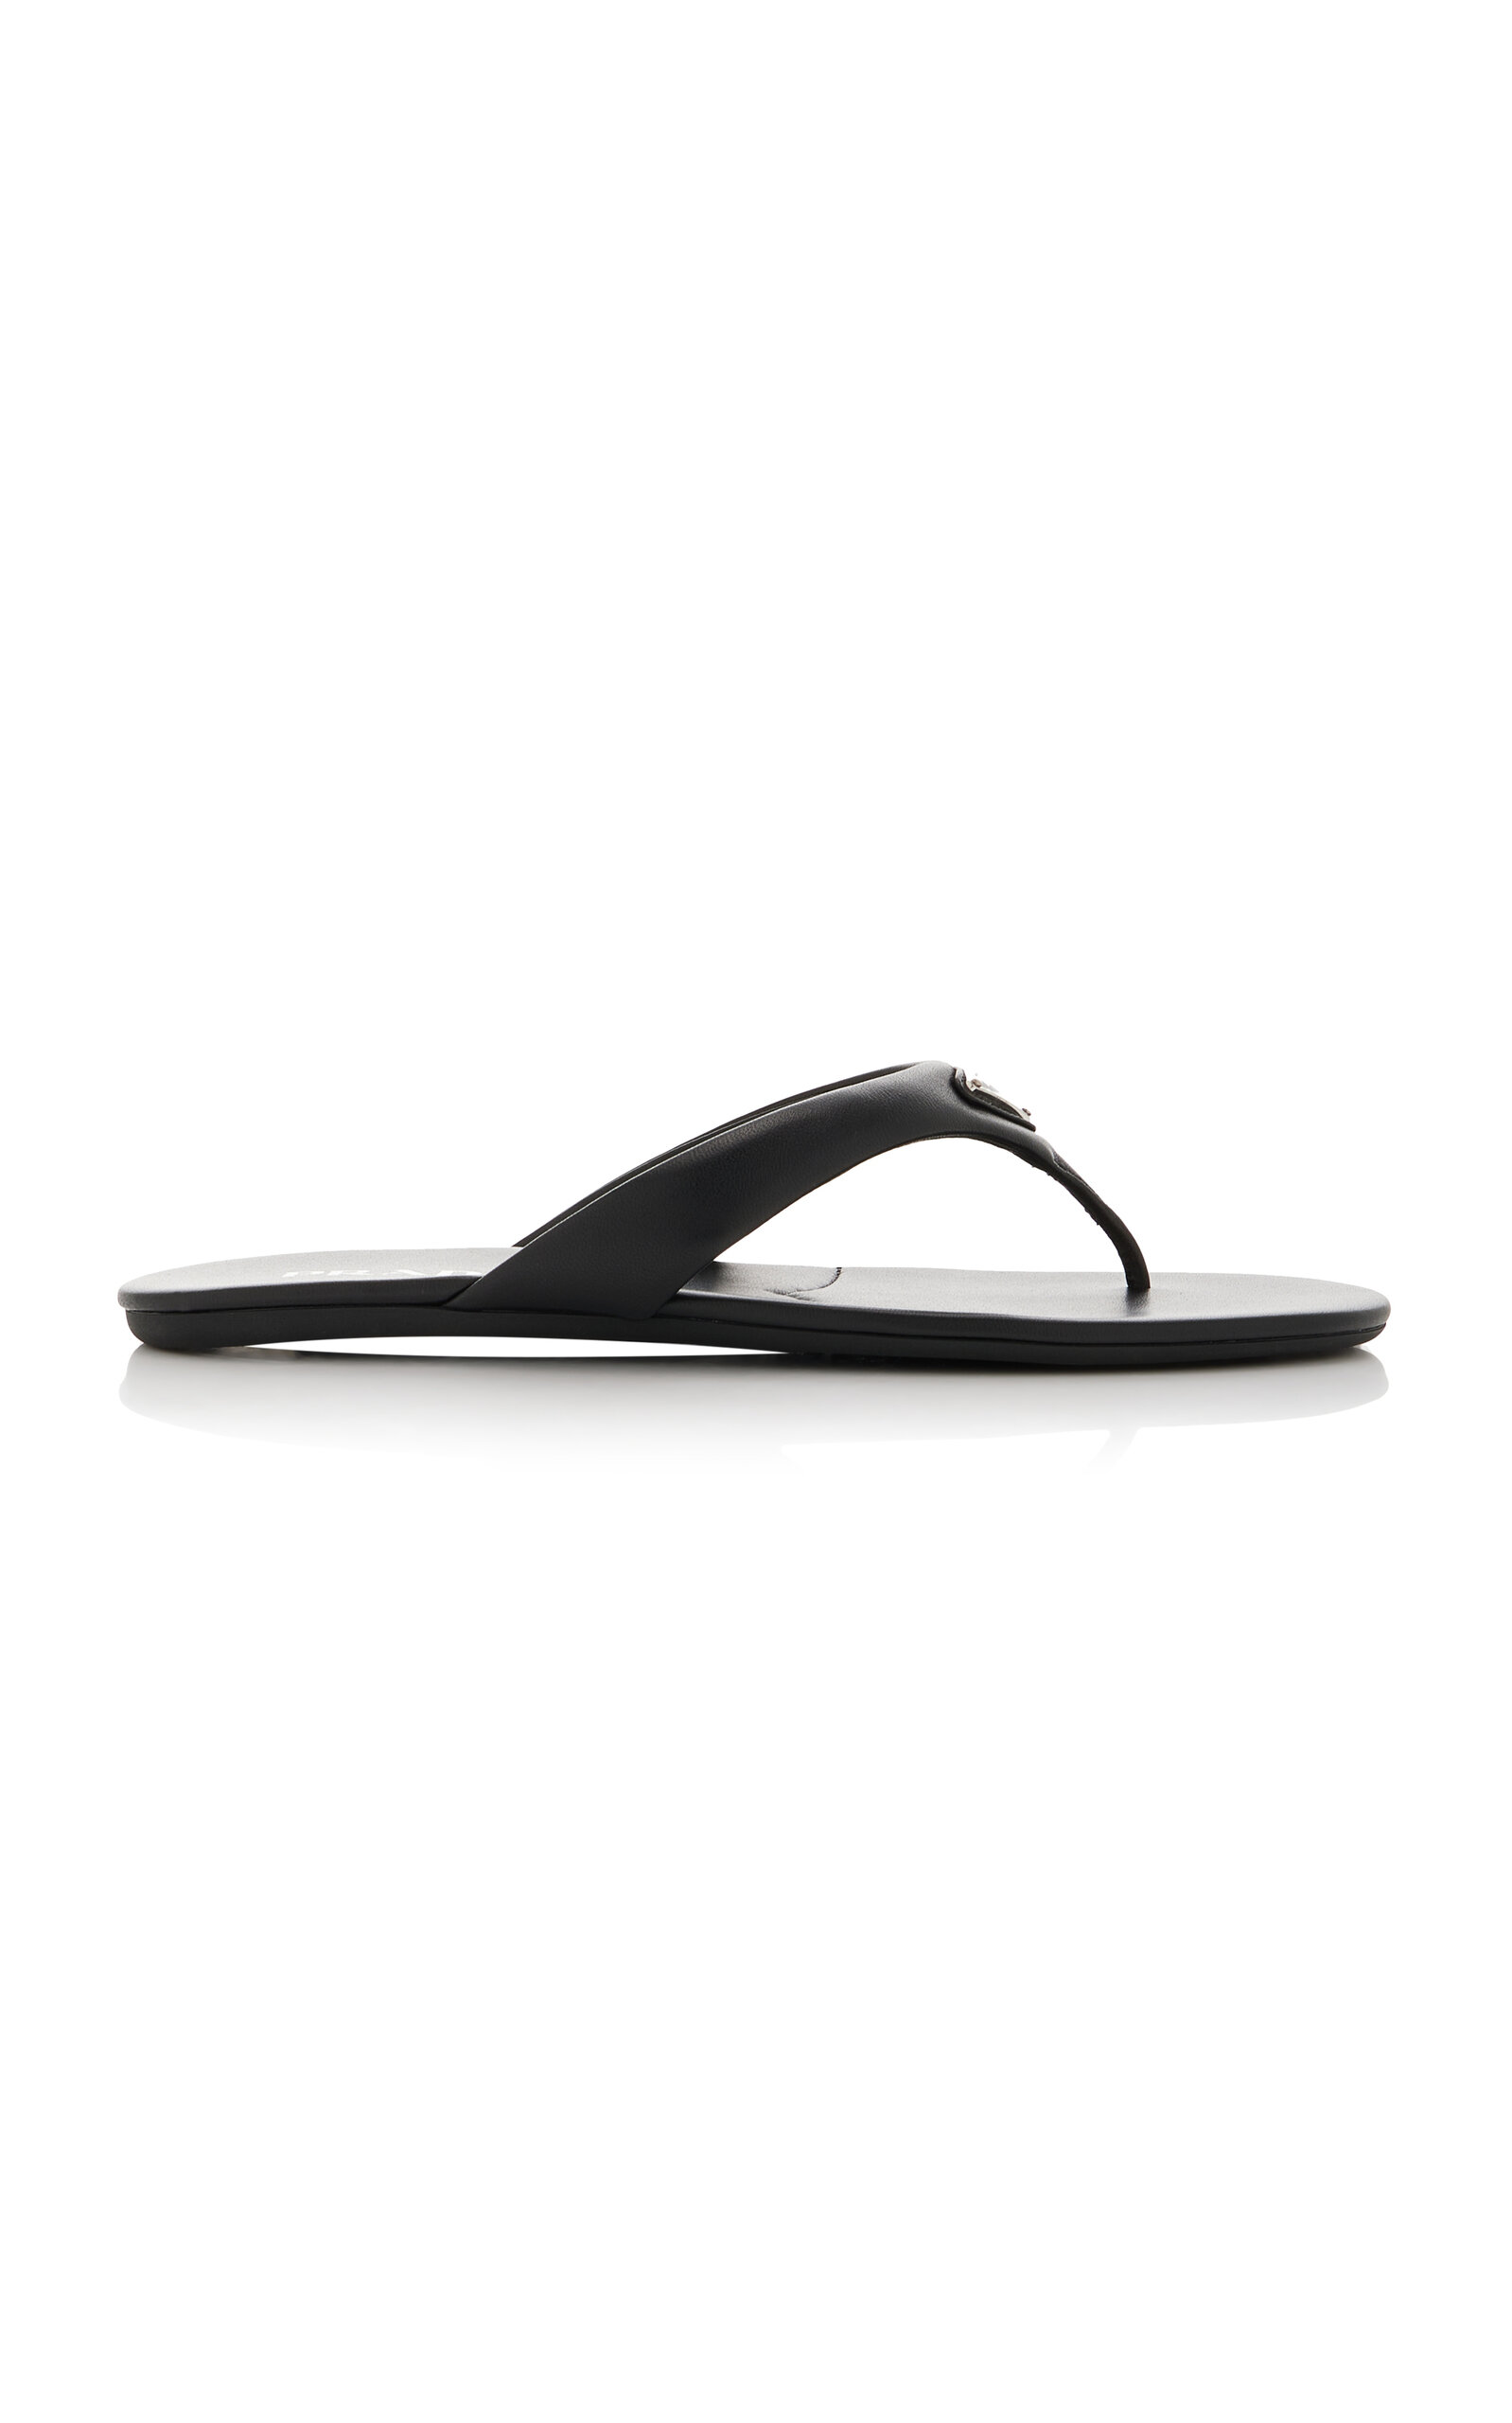 Prada - Leather Flip-Flop Sandals - Black - IT 36 - Moda Operandi